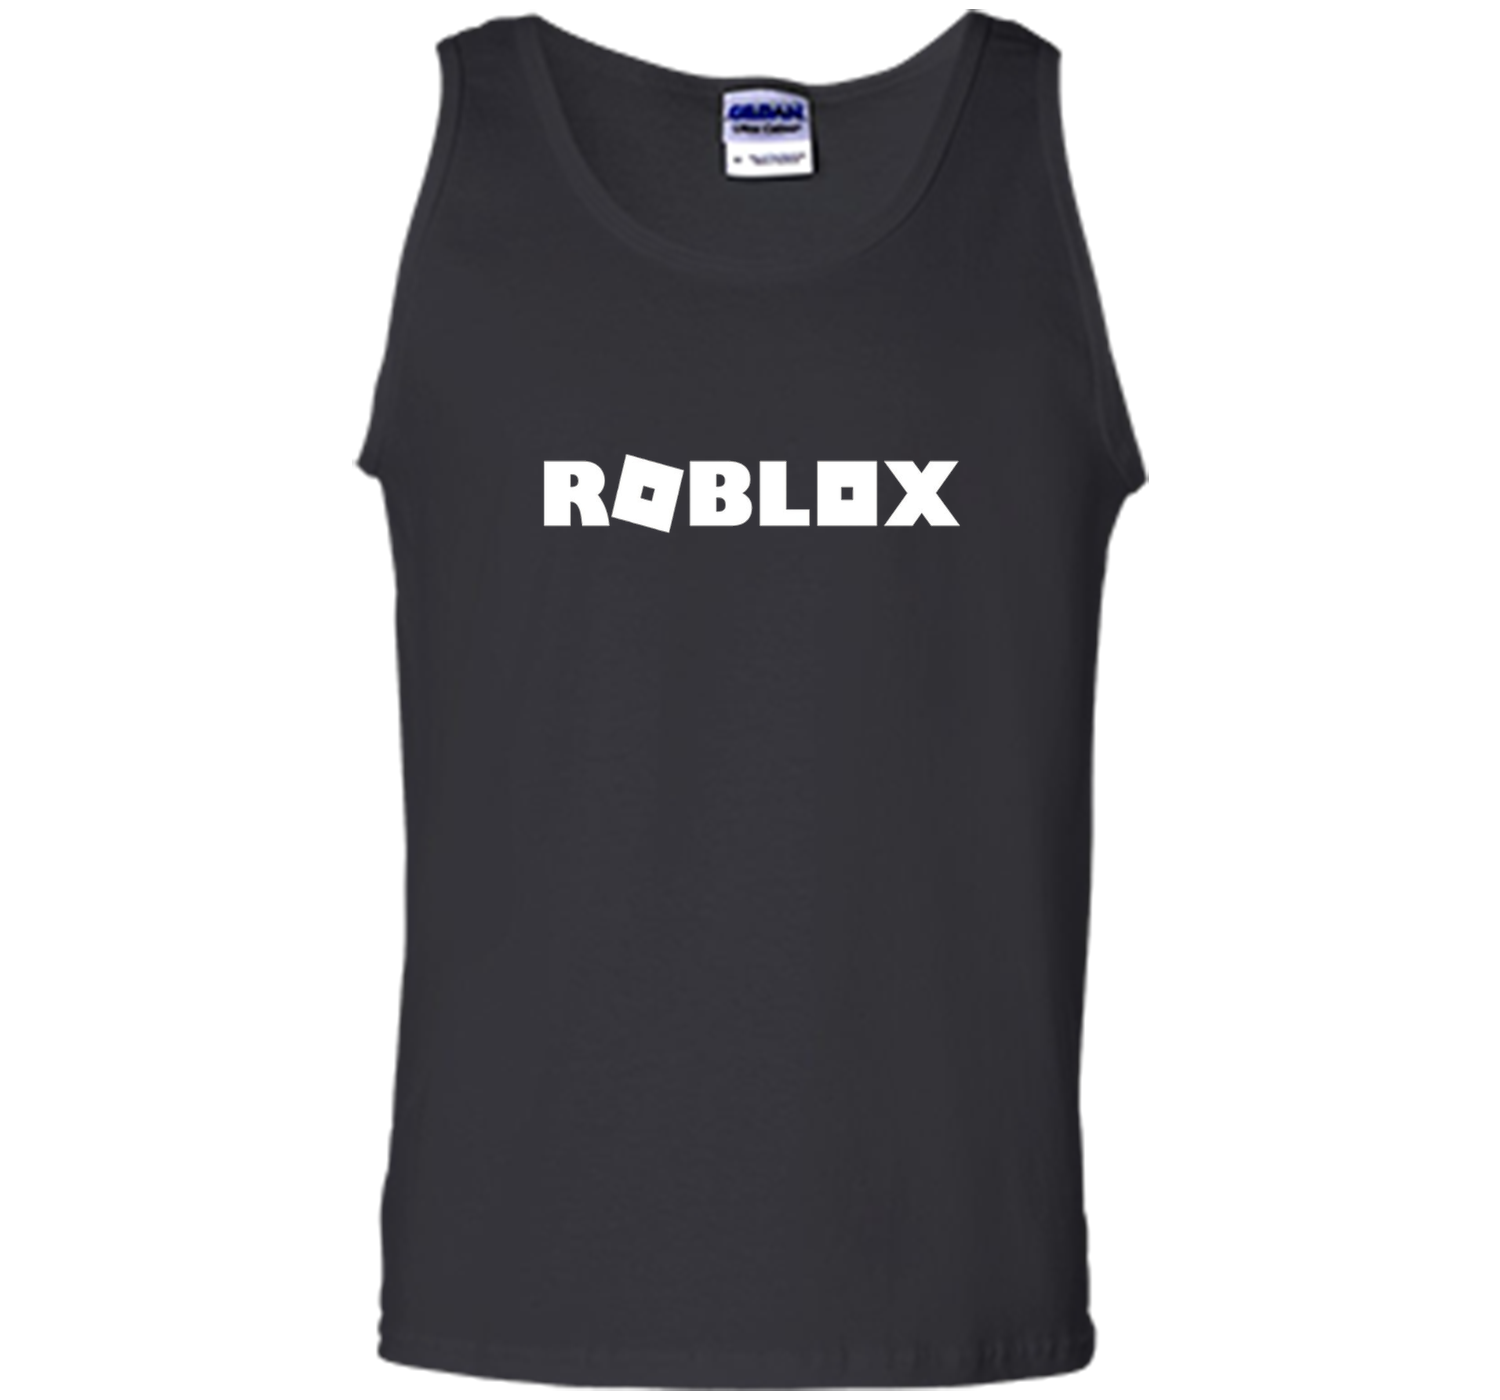 Roblox T Shirts Maker Rldm - roblox customized tshirt shirt